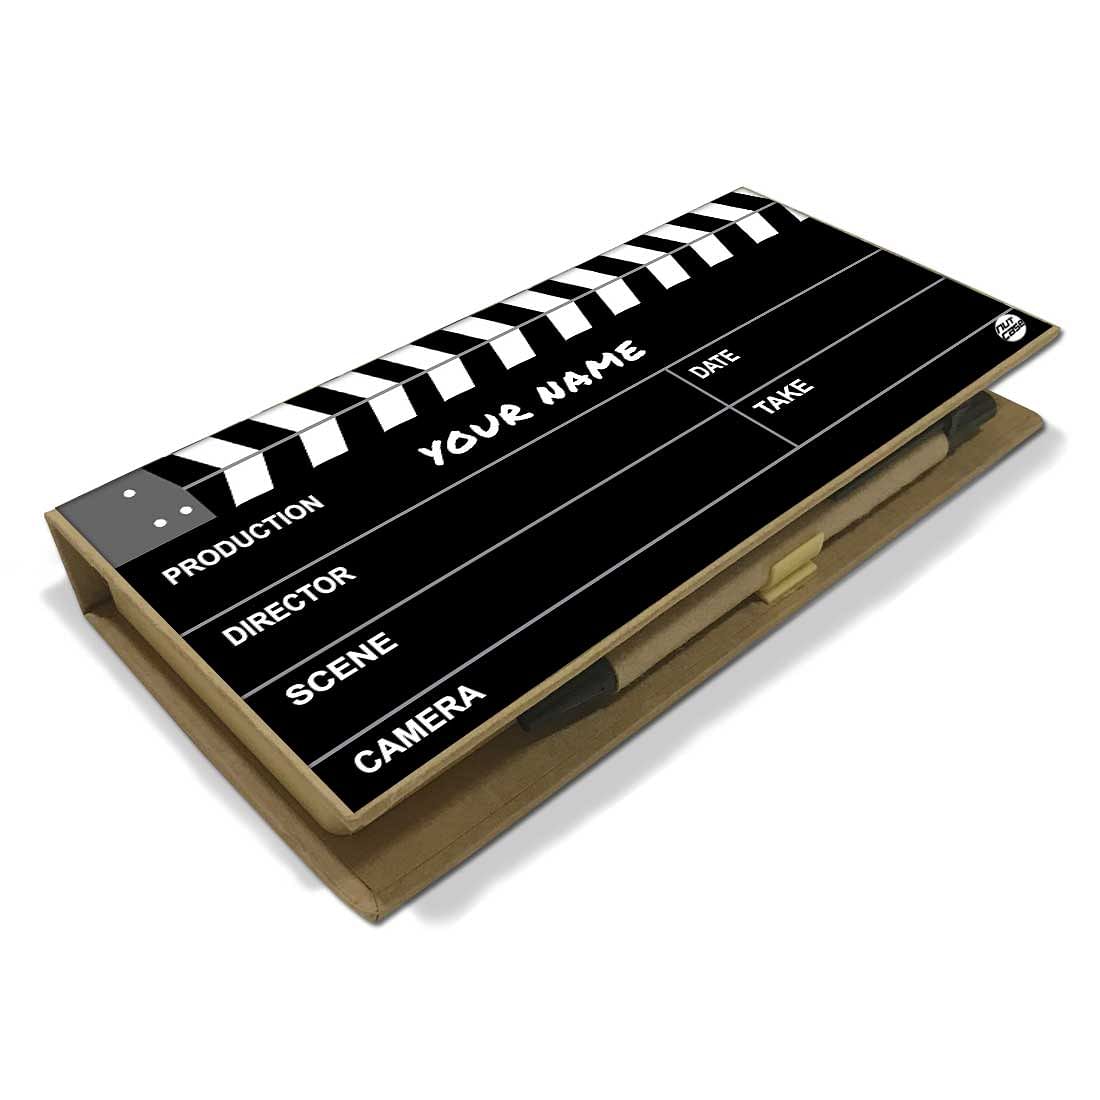 Personalized Stationery Kit Set Organizer - Flimy Movie Nutcase